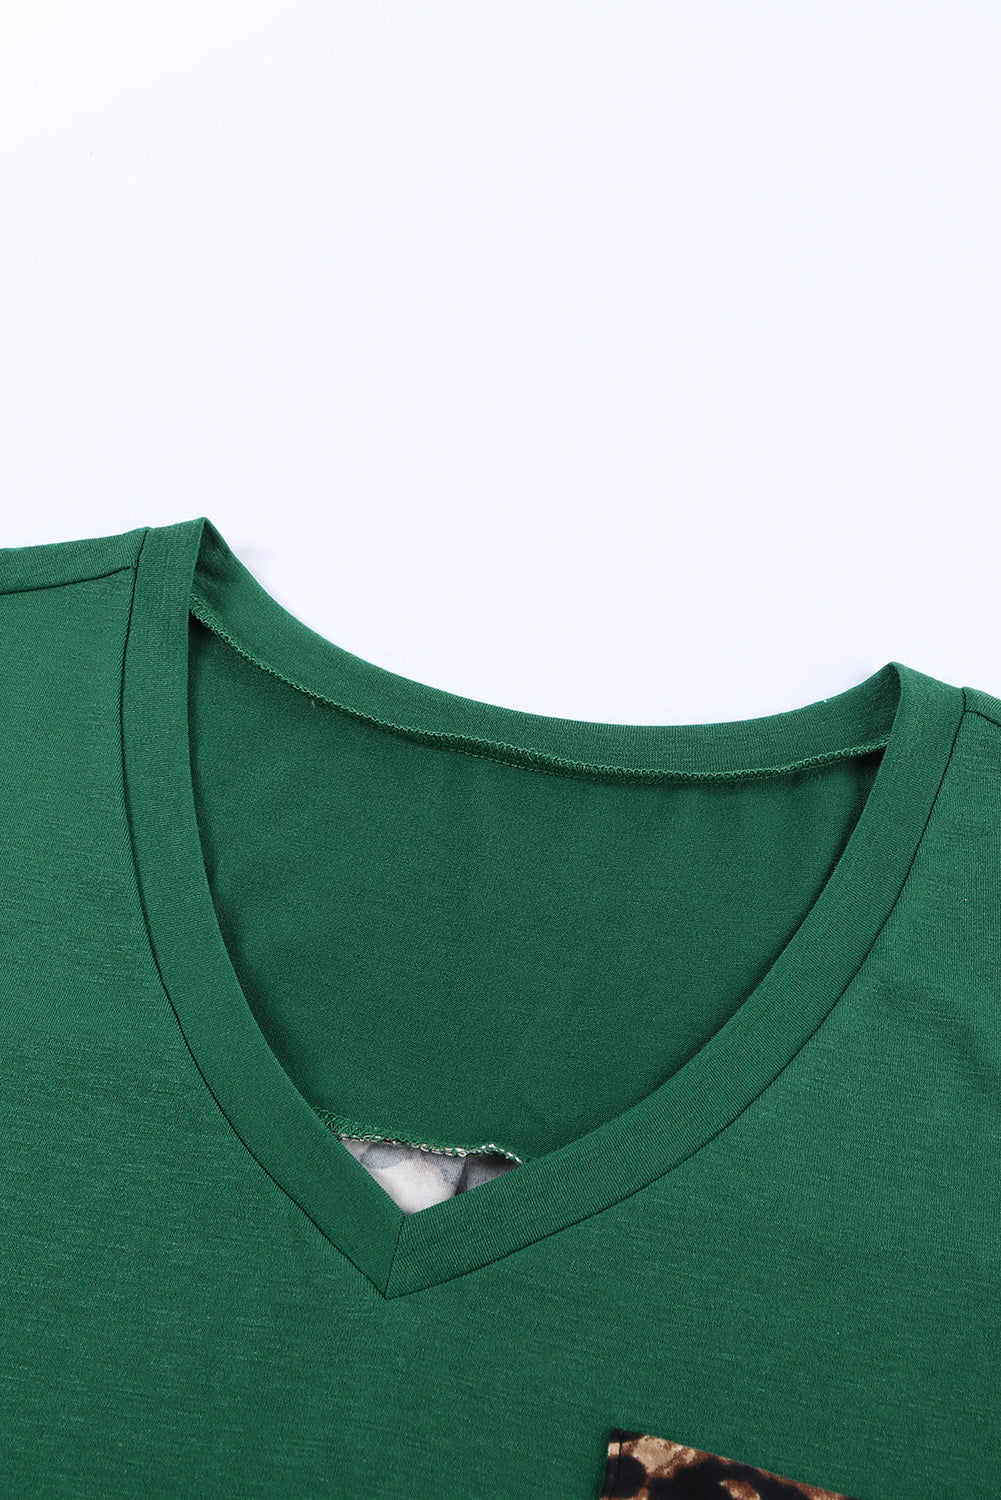 Green Women's Leopard Printed Short Sleeve T-Shirt Blouse LC253578-9